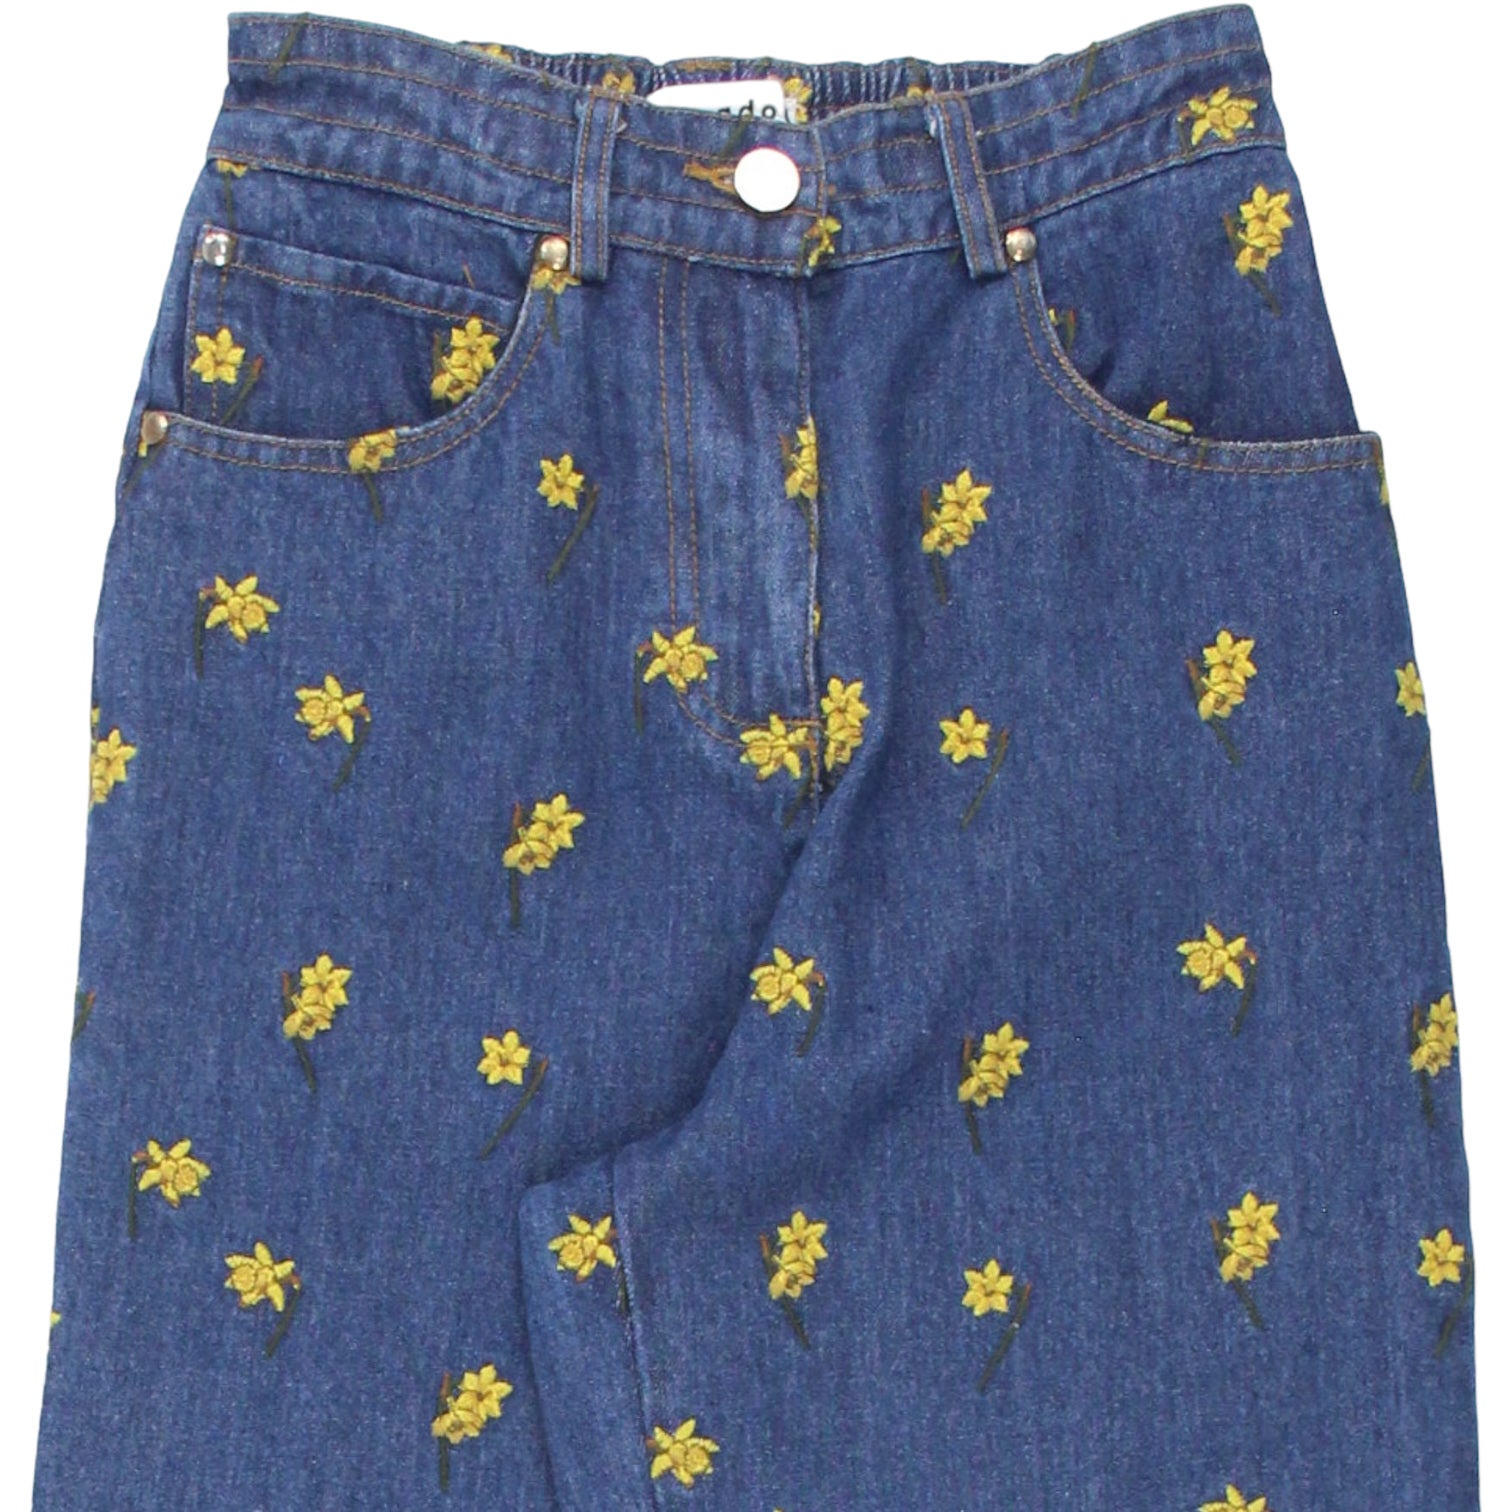 Meadows Blue Daffodil Jeans